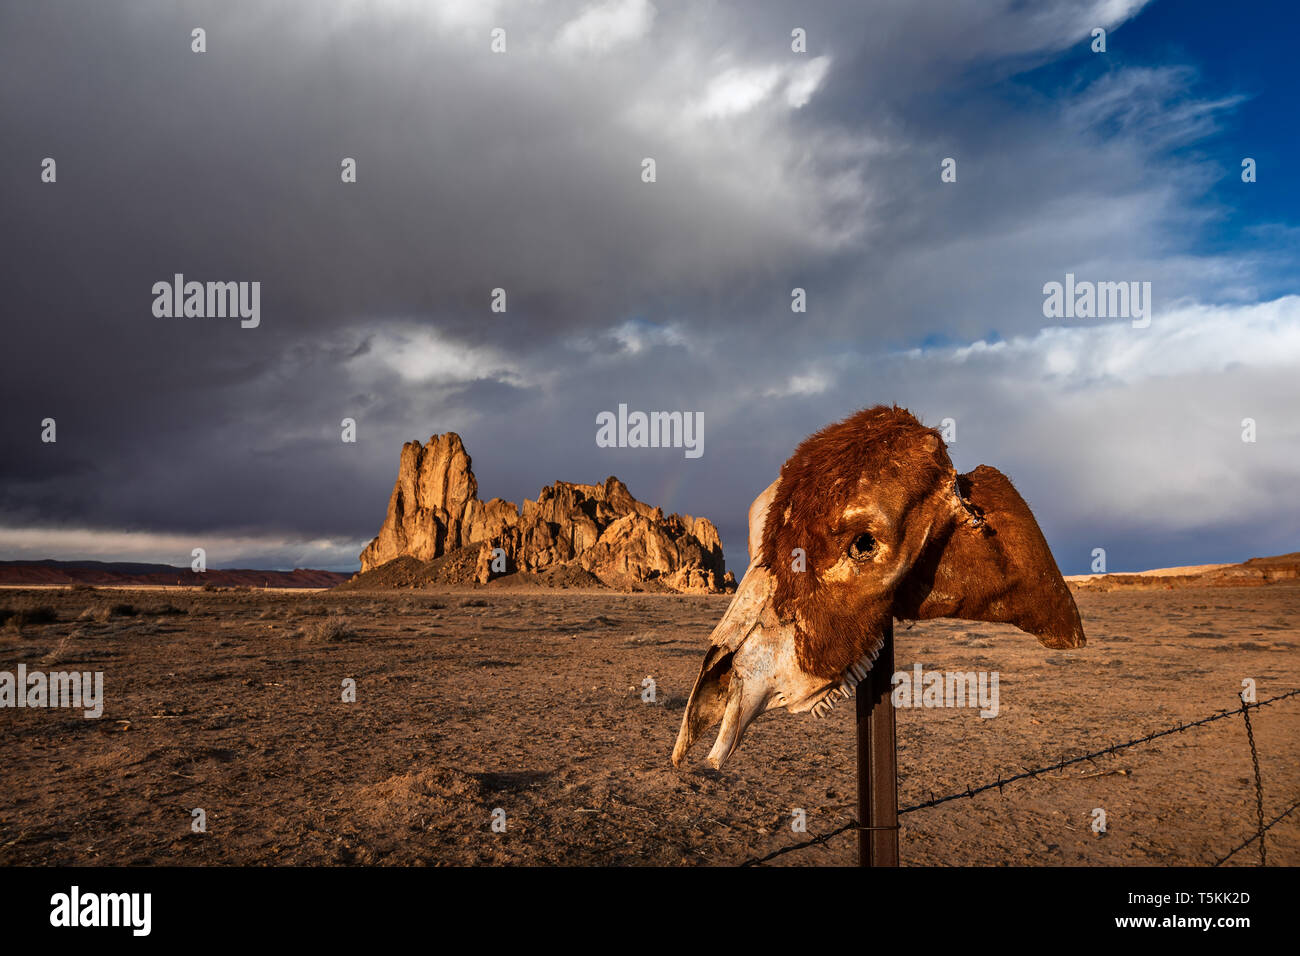 Monument Valley, Arizona desert landscape with a skull Stock Photo